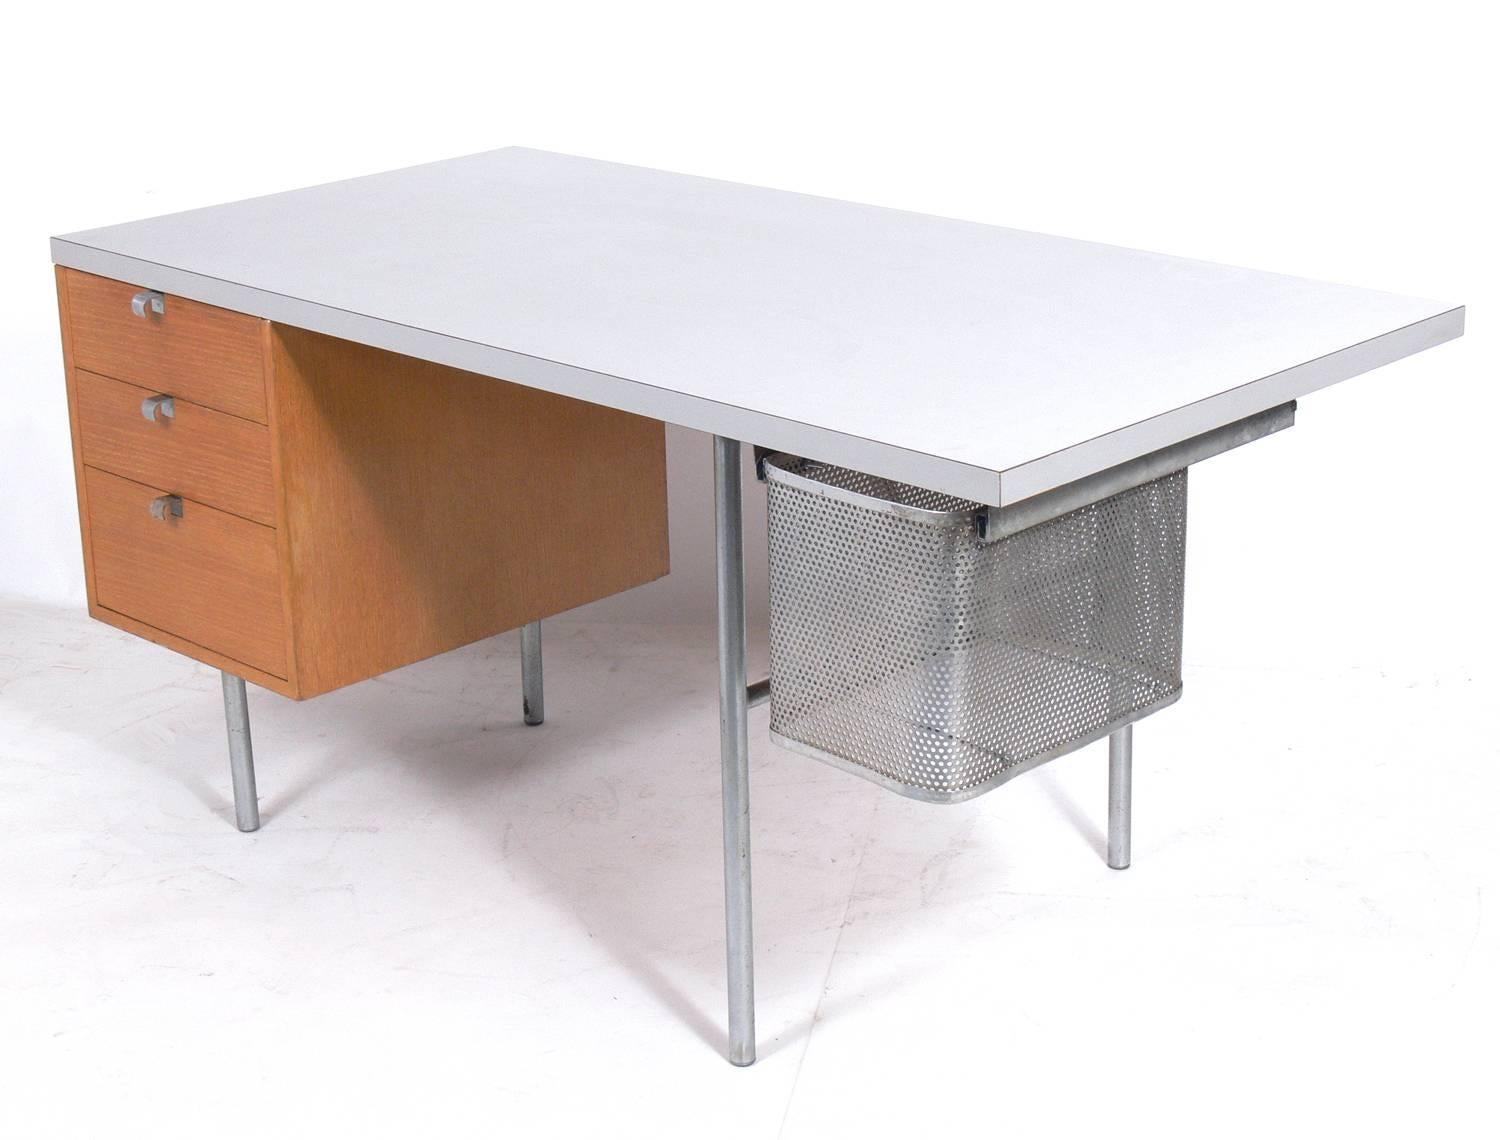 Clean lined modern desk, designed for the 